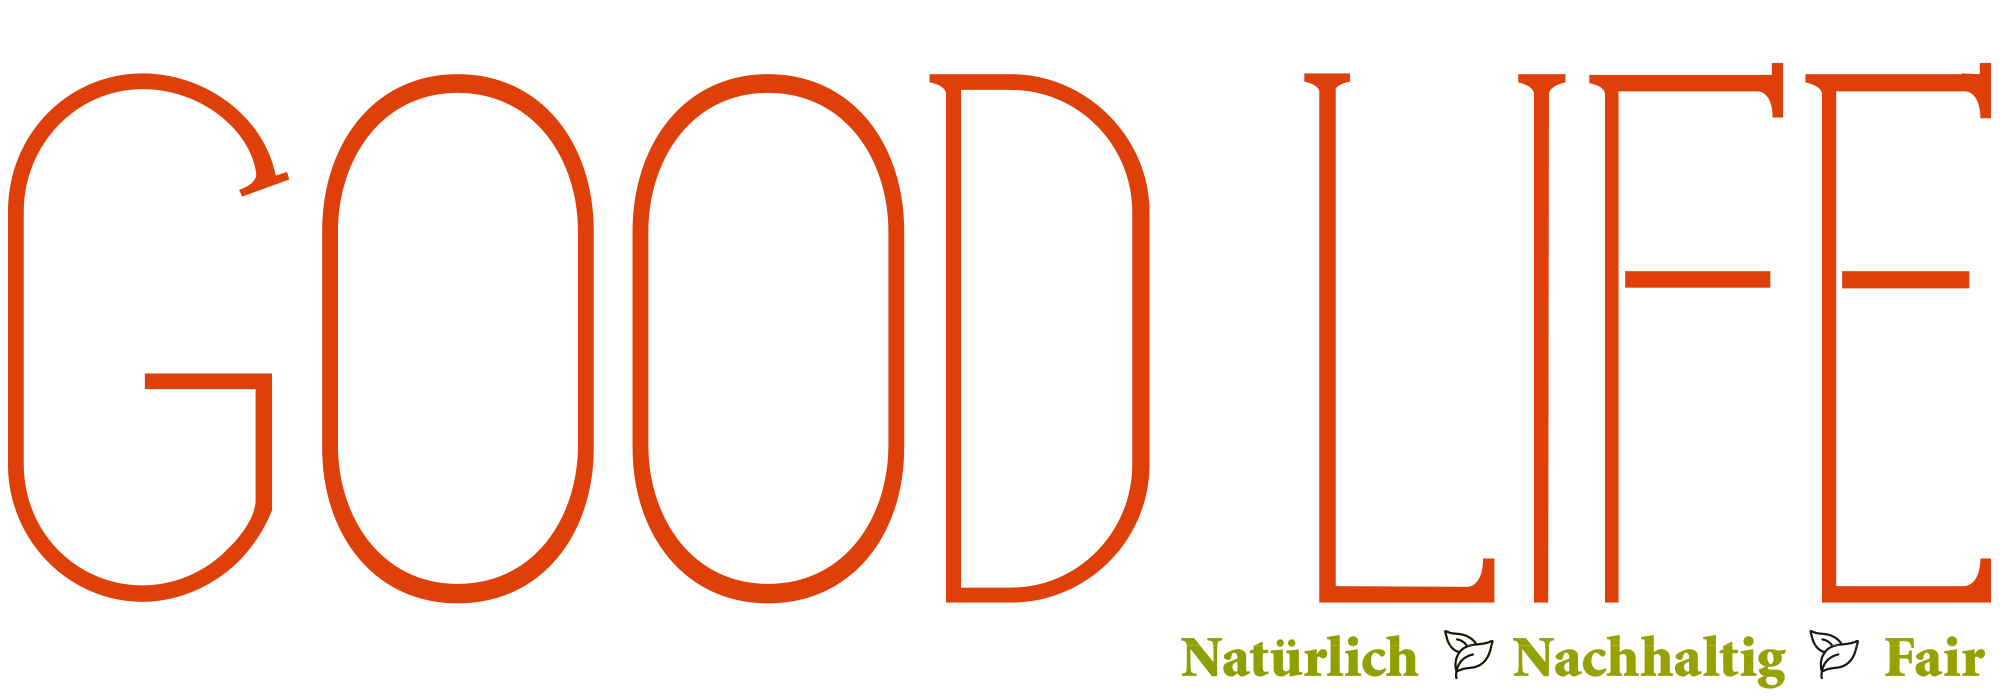 goodlife logo 2019